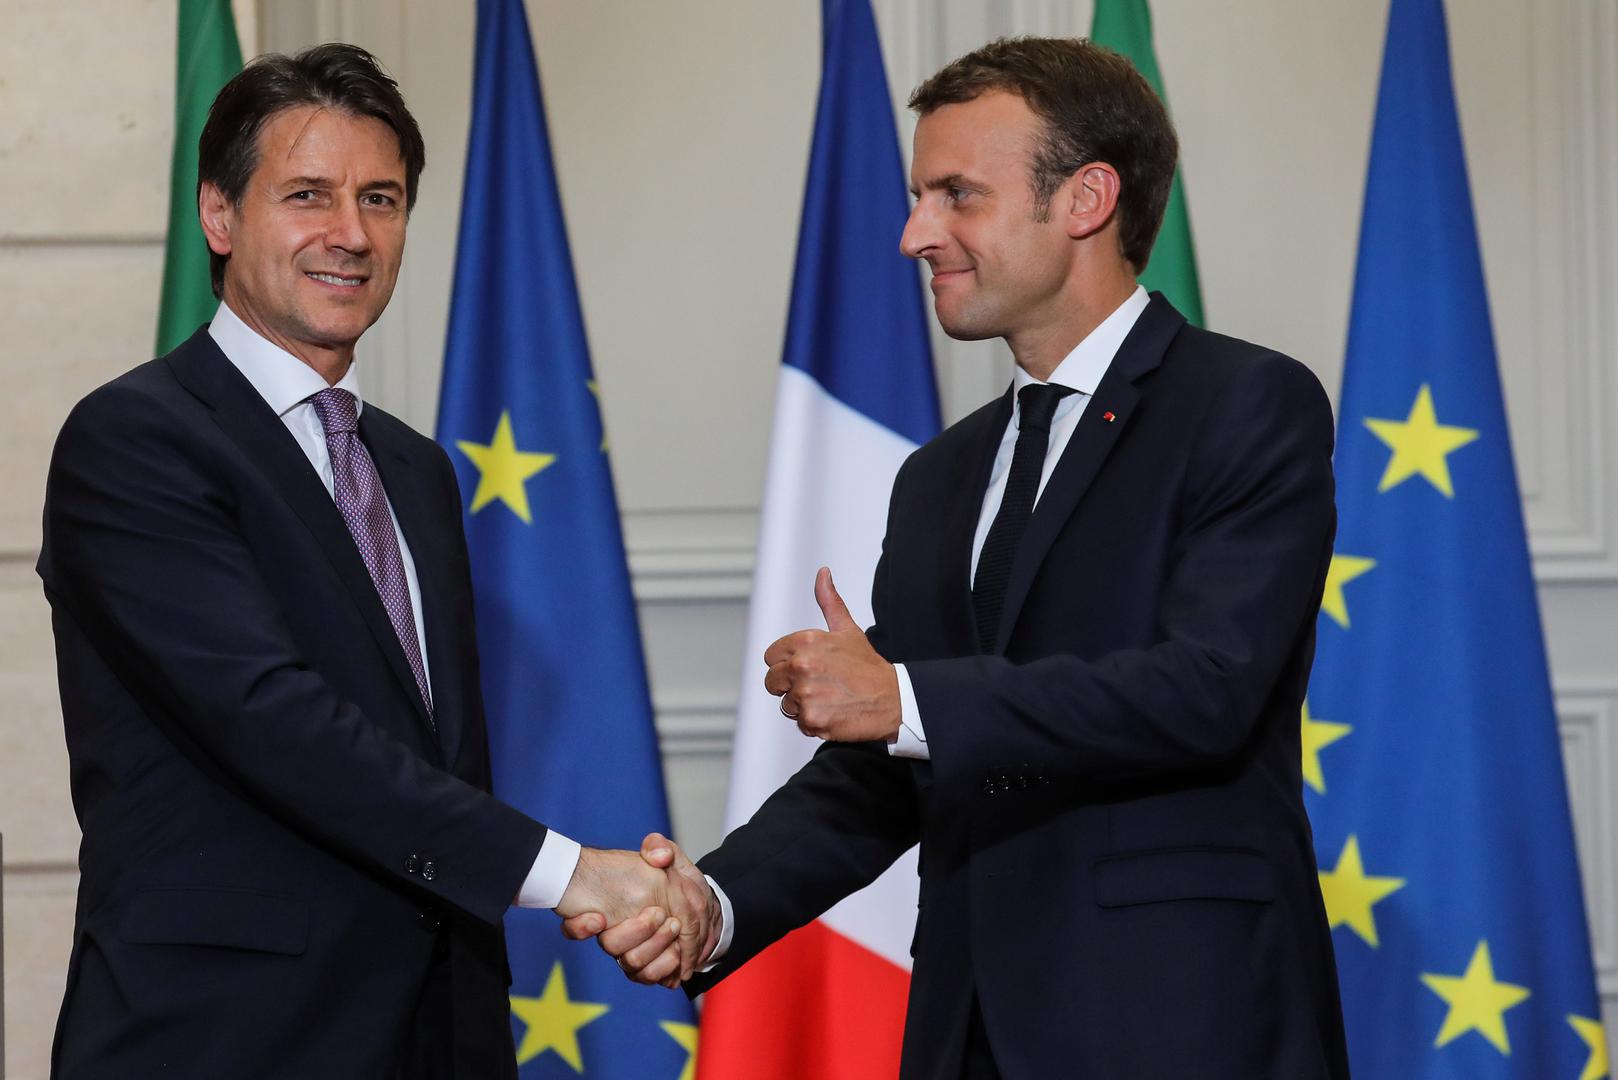 Giussepe Conte ipak je jučer došao u posjet Emmanuelu Macronu